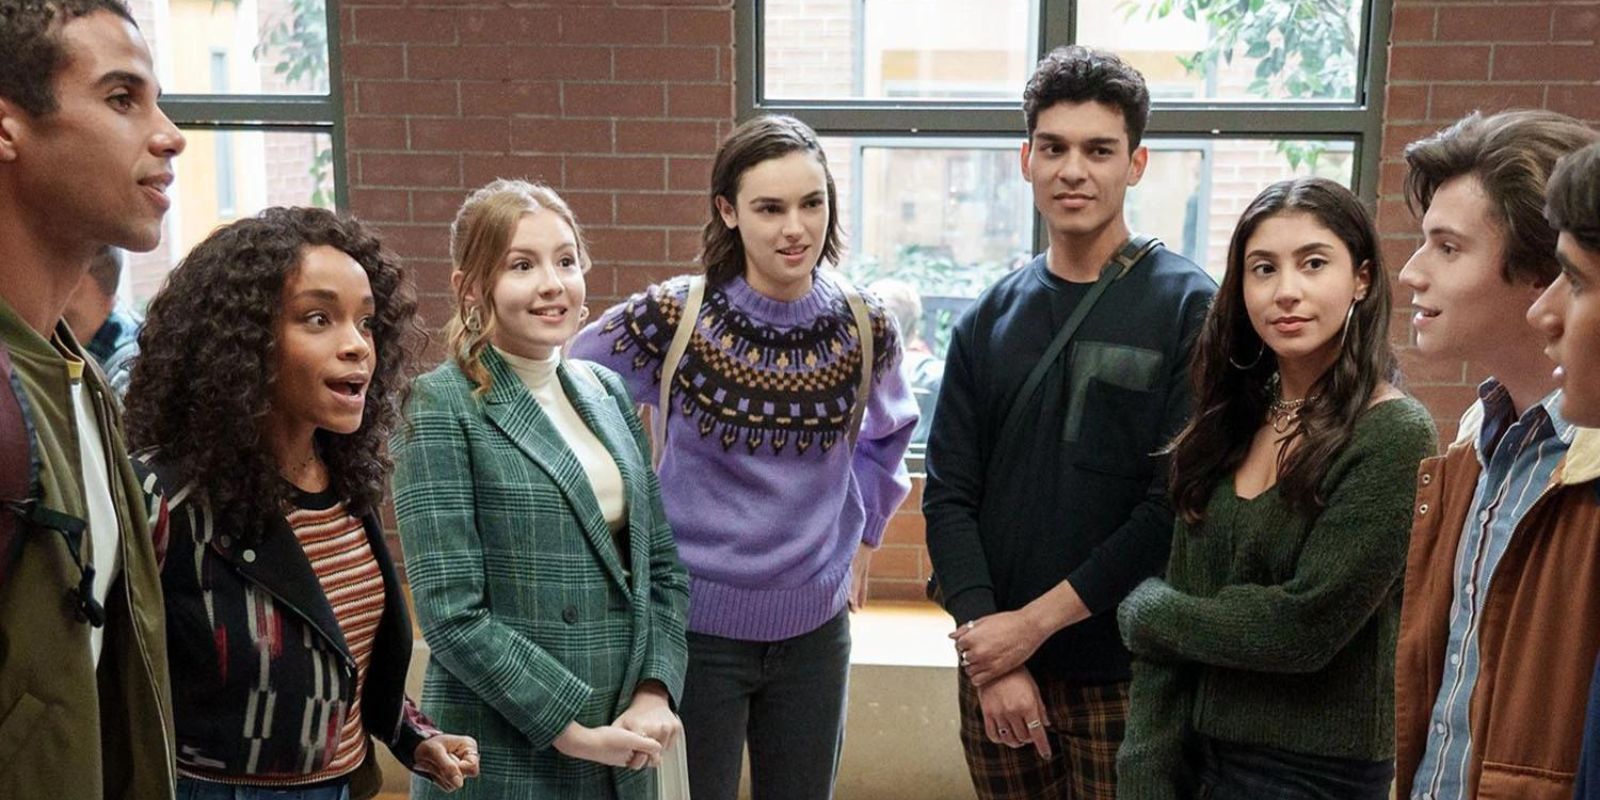 teen characters meeting in the school hallway